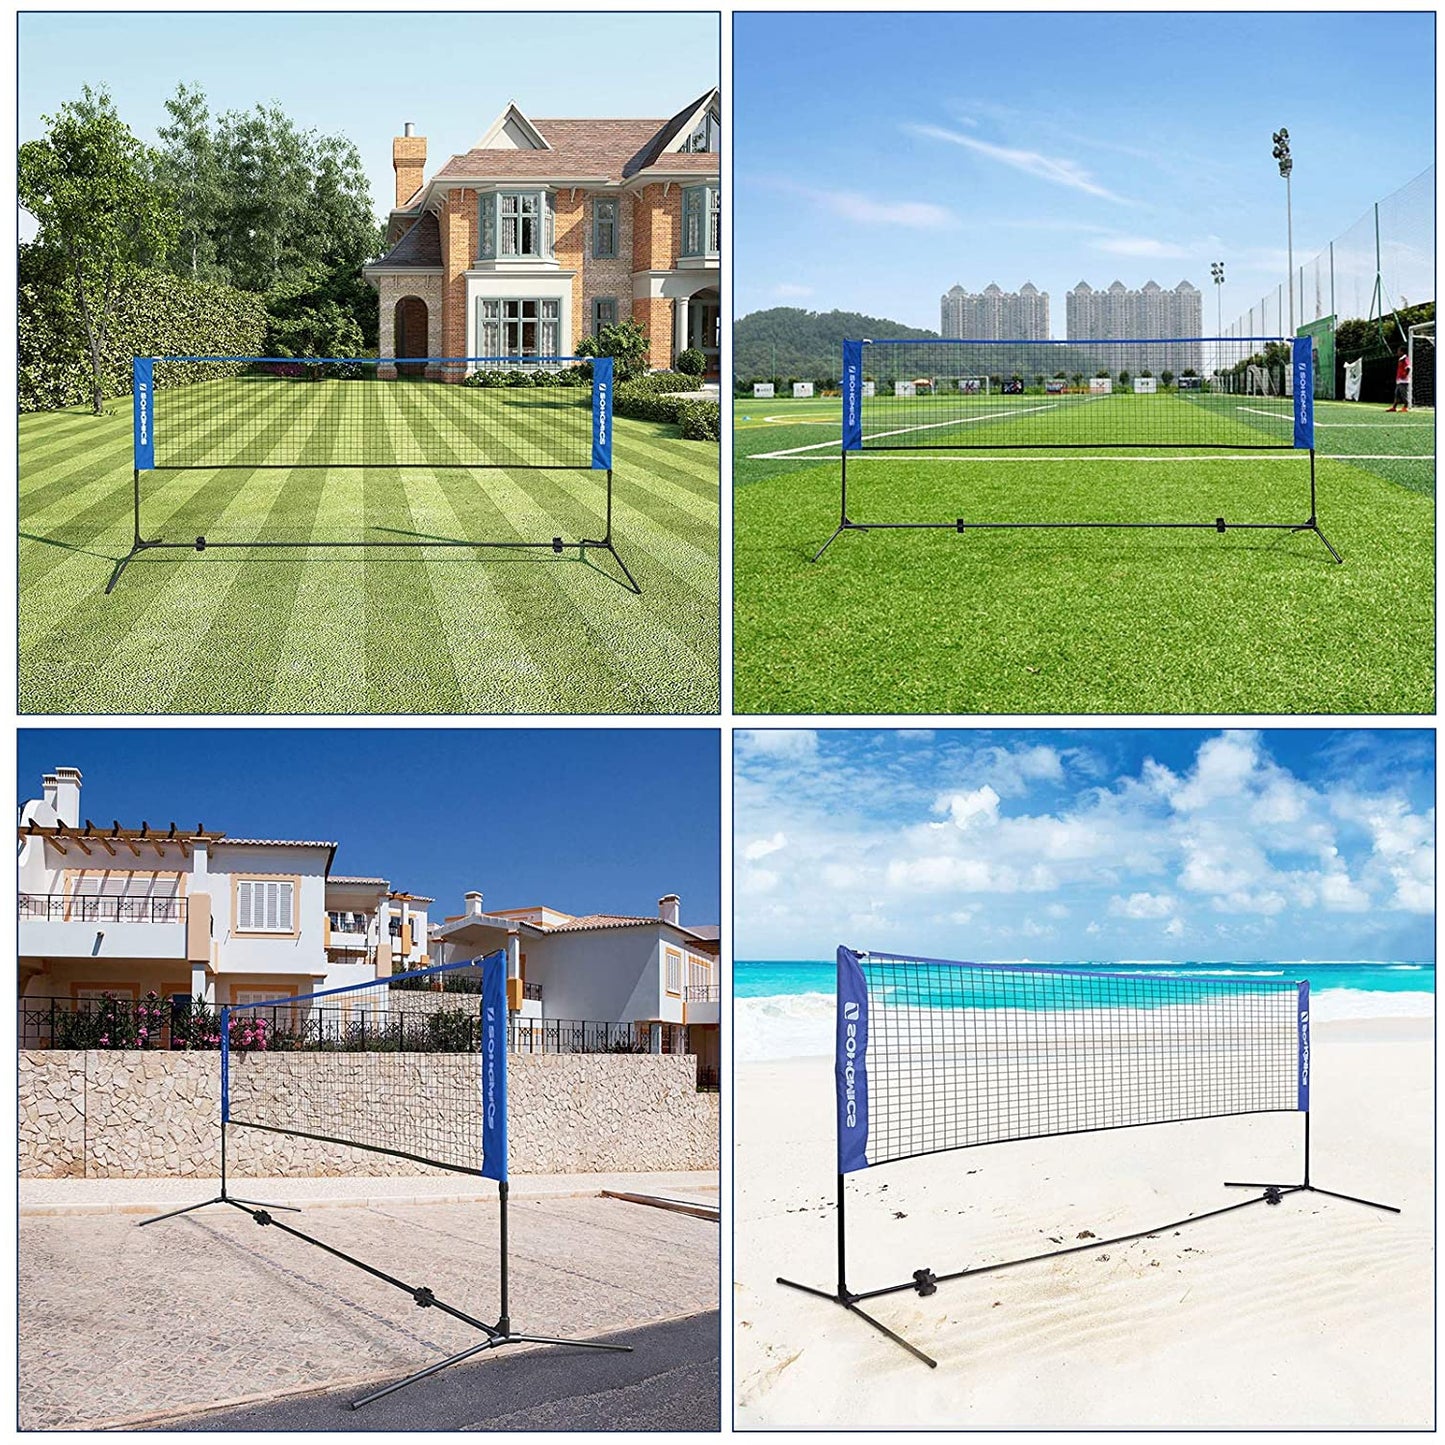 Nancy's Fullarton Badminton Net - Tennis Net - Height Adjustable - Iron Frame - Transport Bag - Blue - Black - Yellow